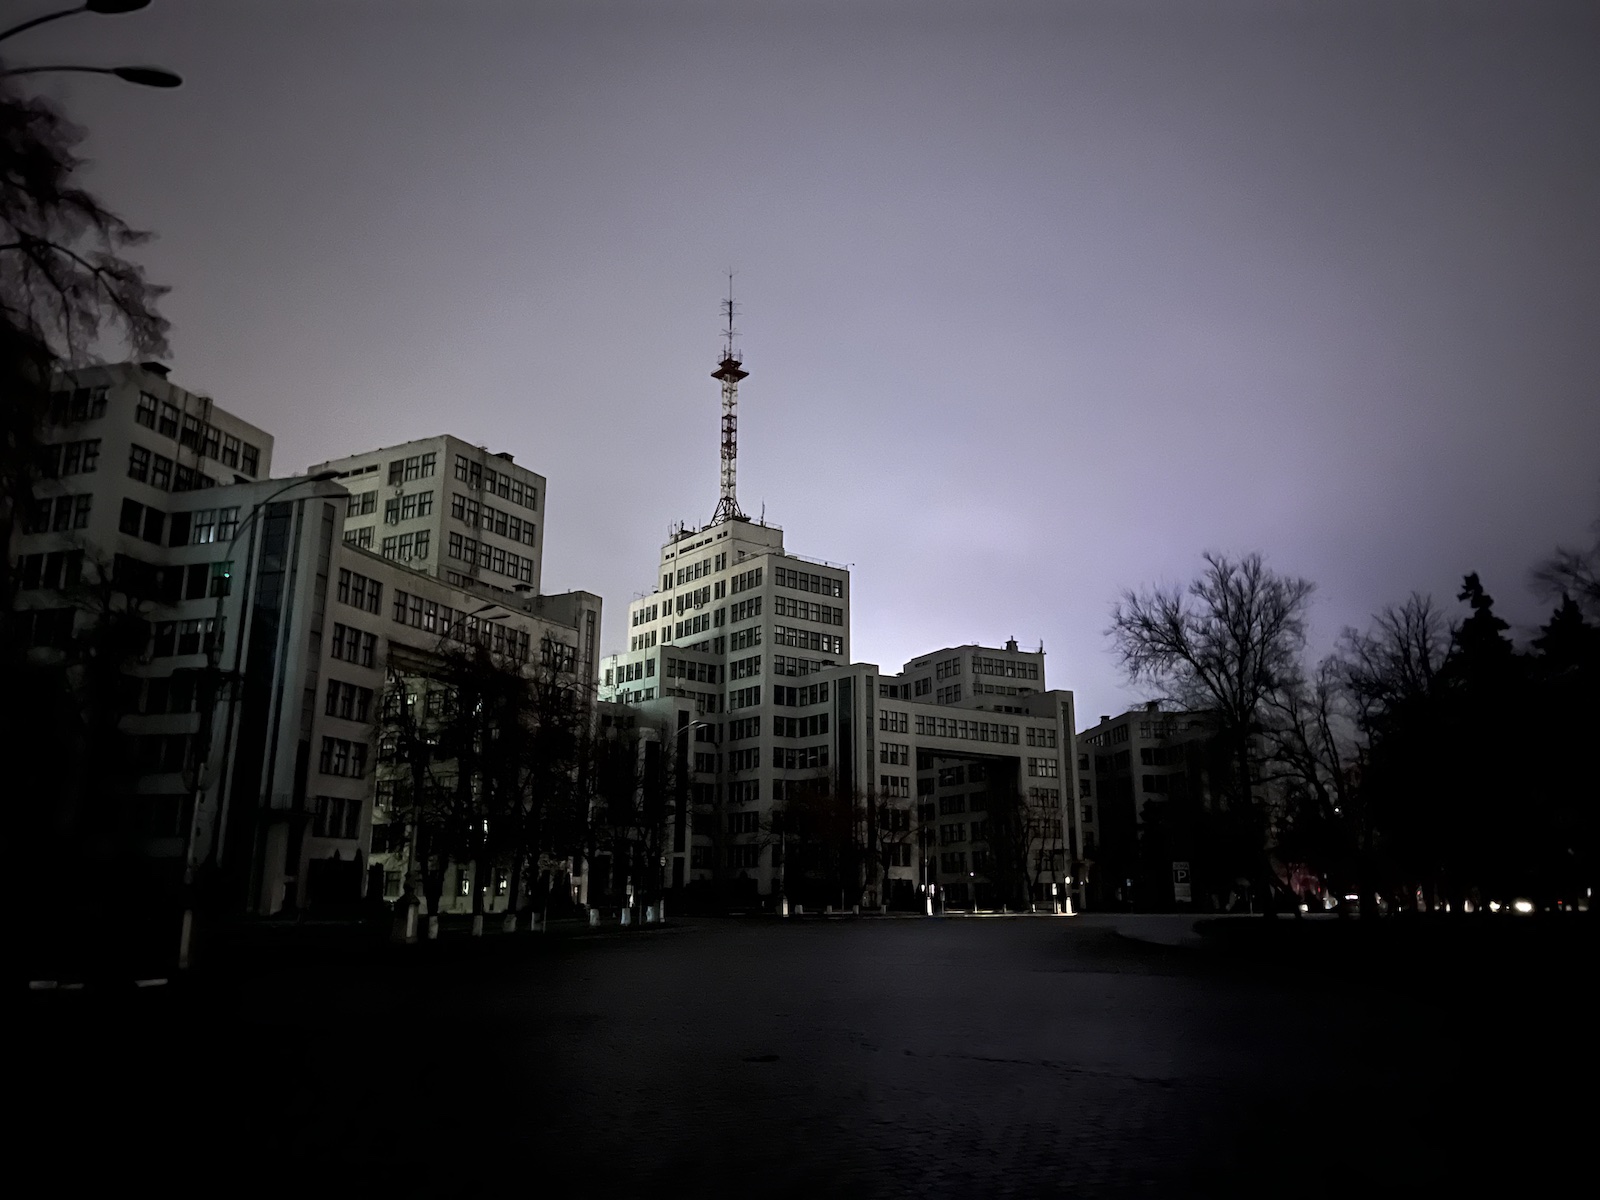 Darkened buildings set off against a bright night sky